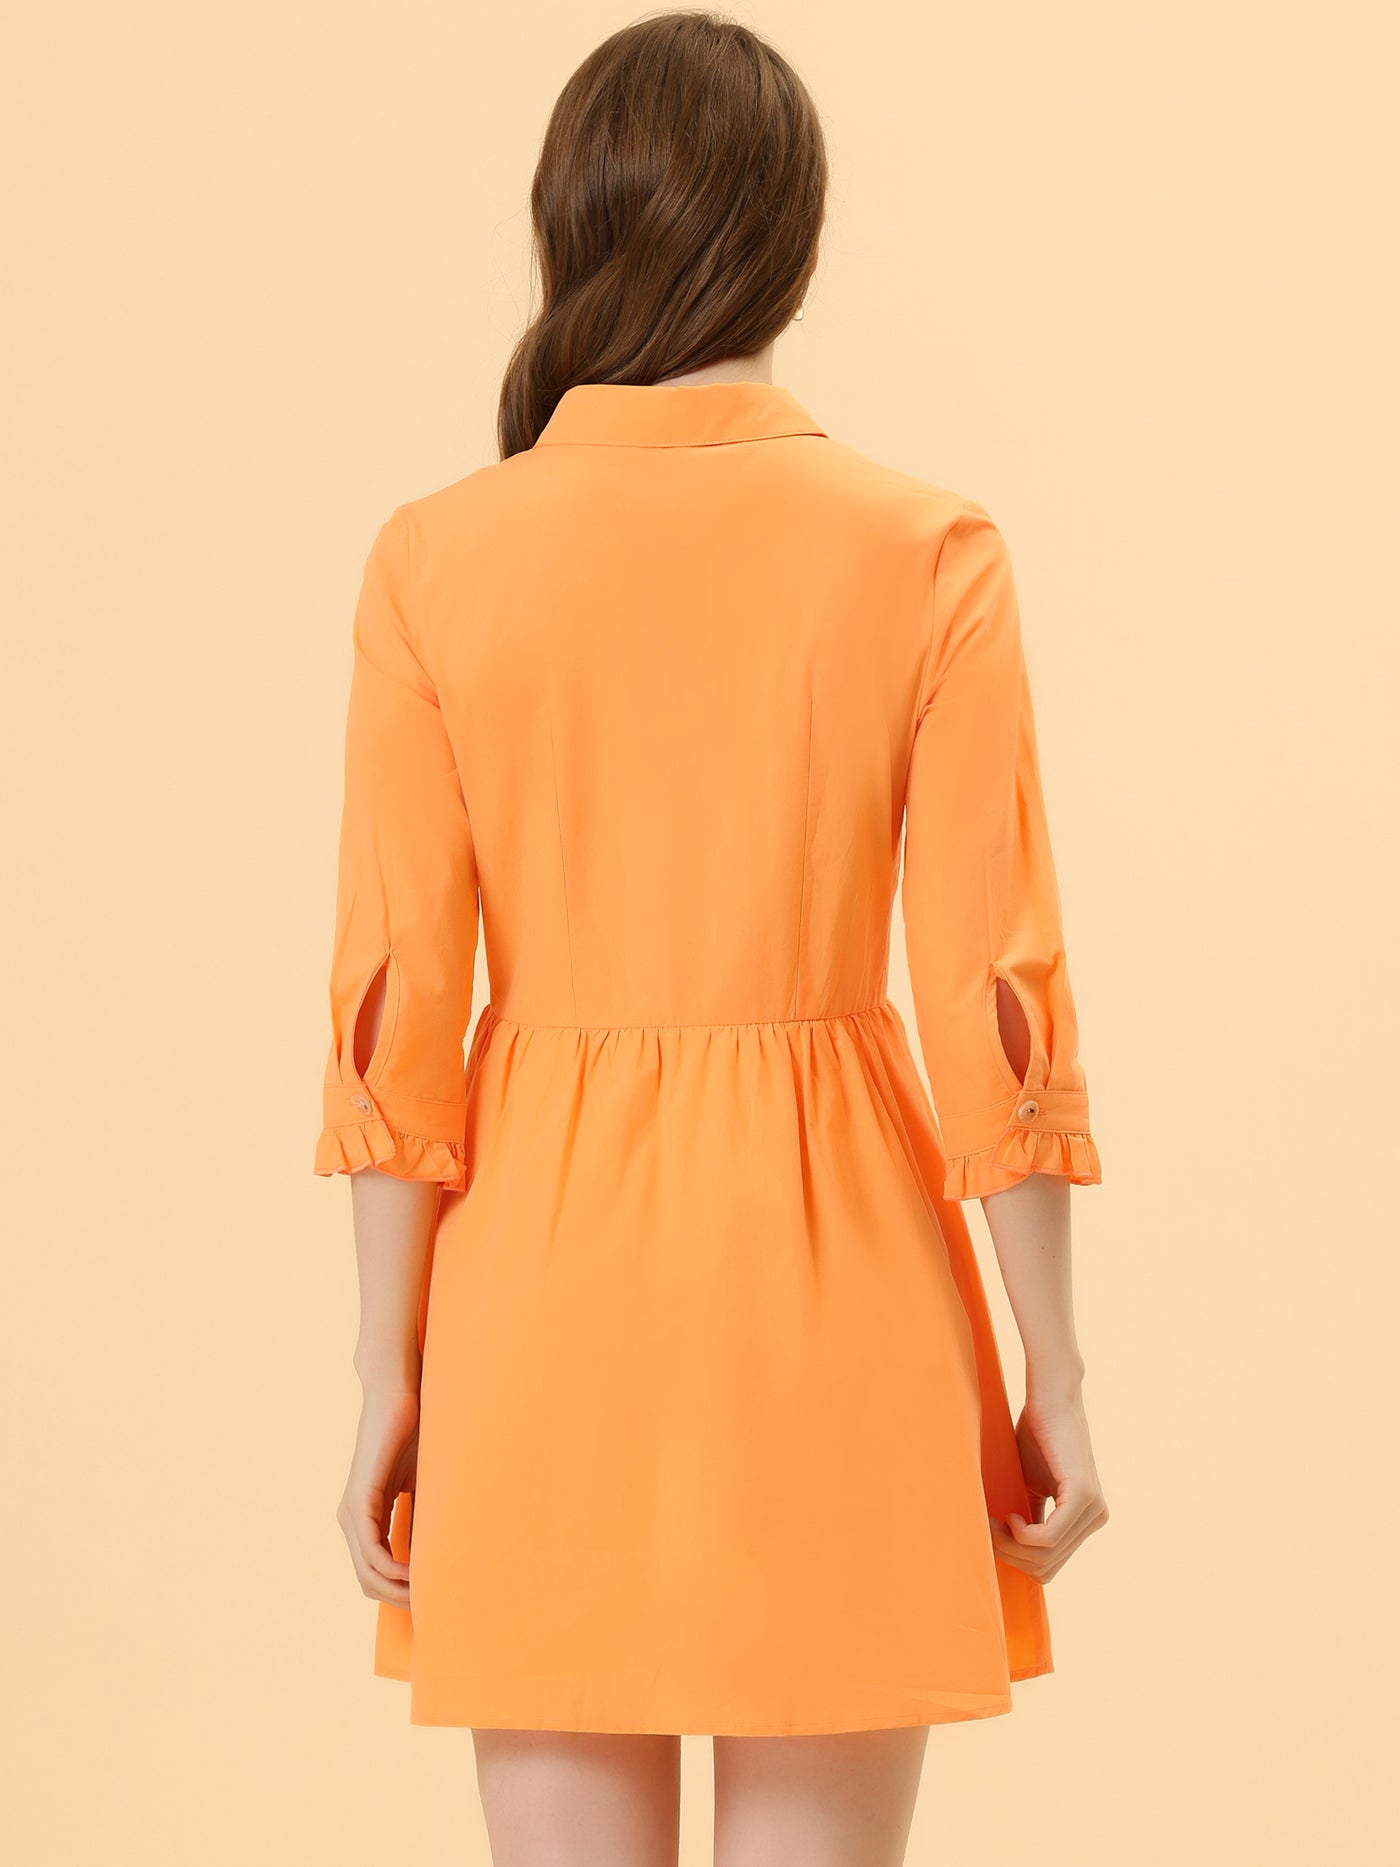 Allegra K Women's Casual Shirt Dress Ruched 3/4 Sleeve Button Up Mini Dresses